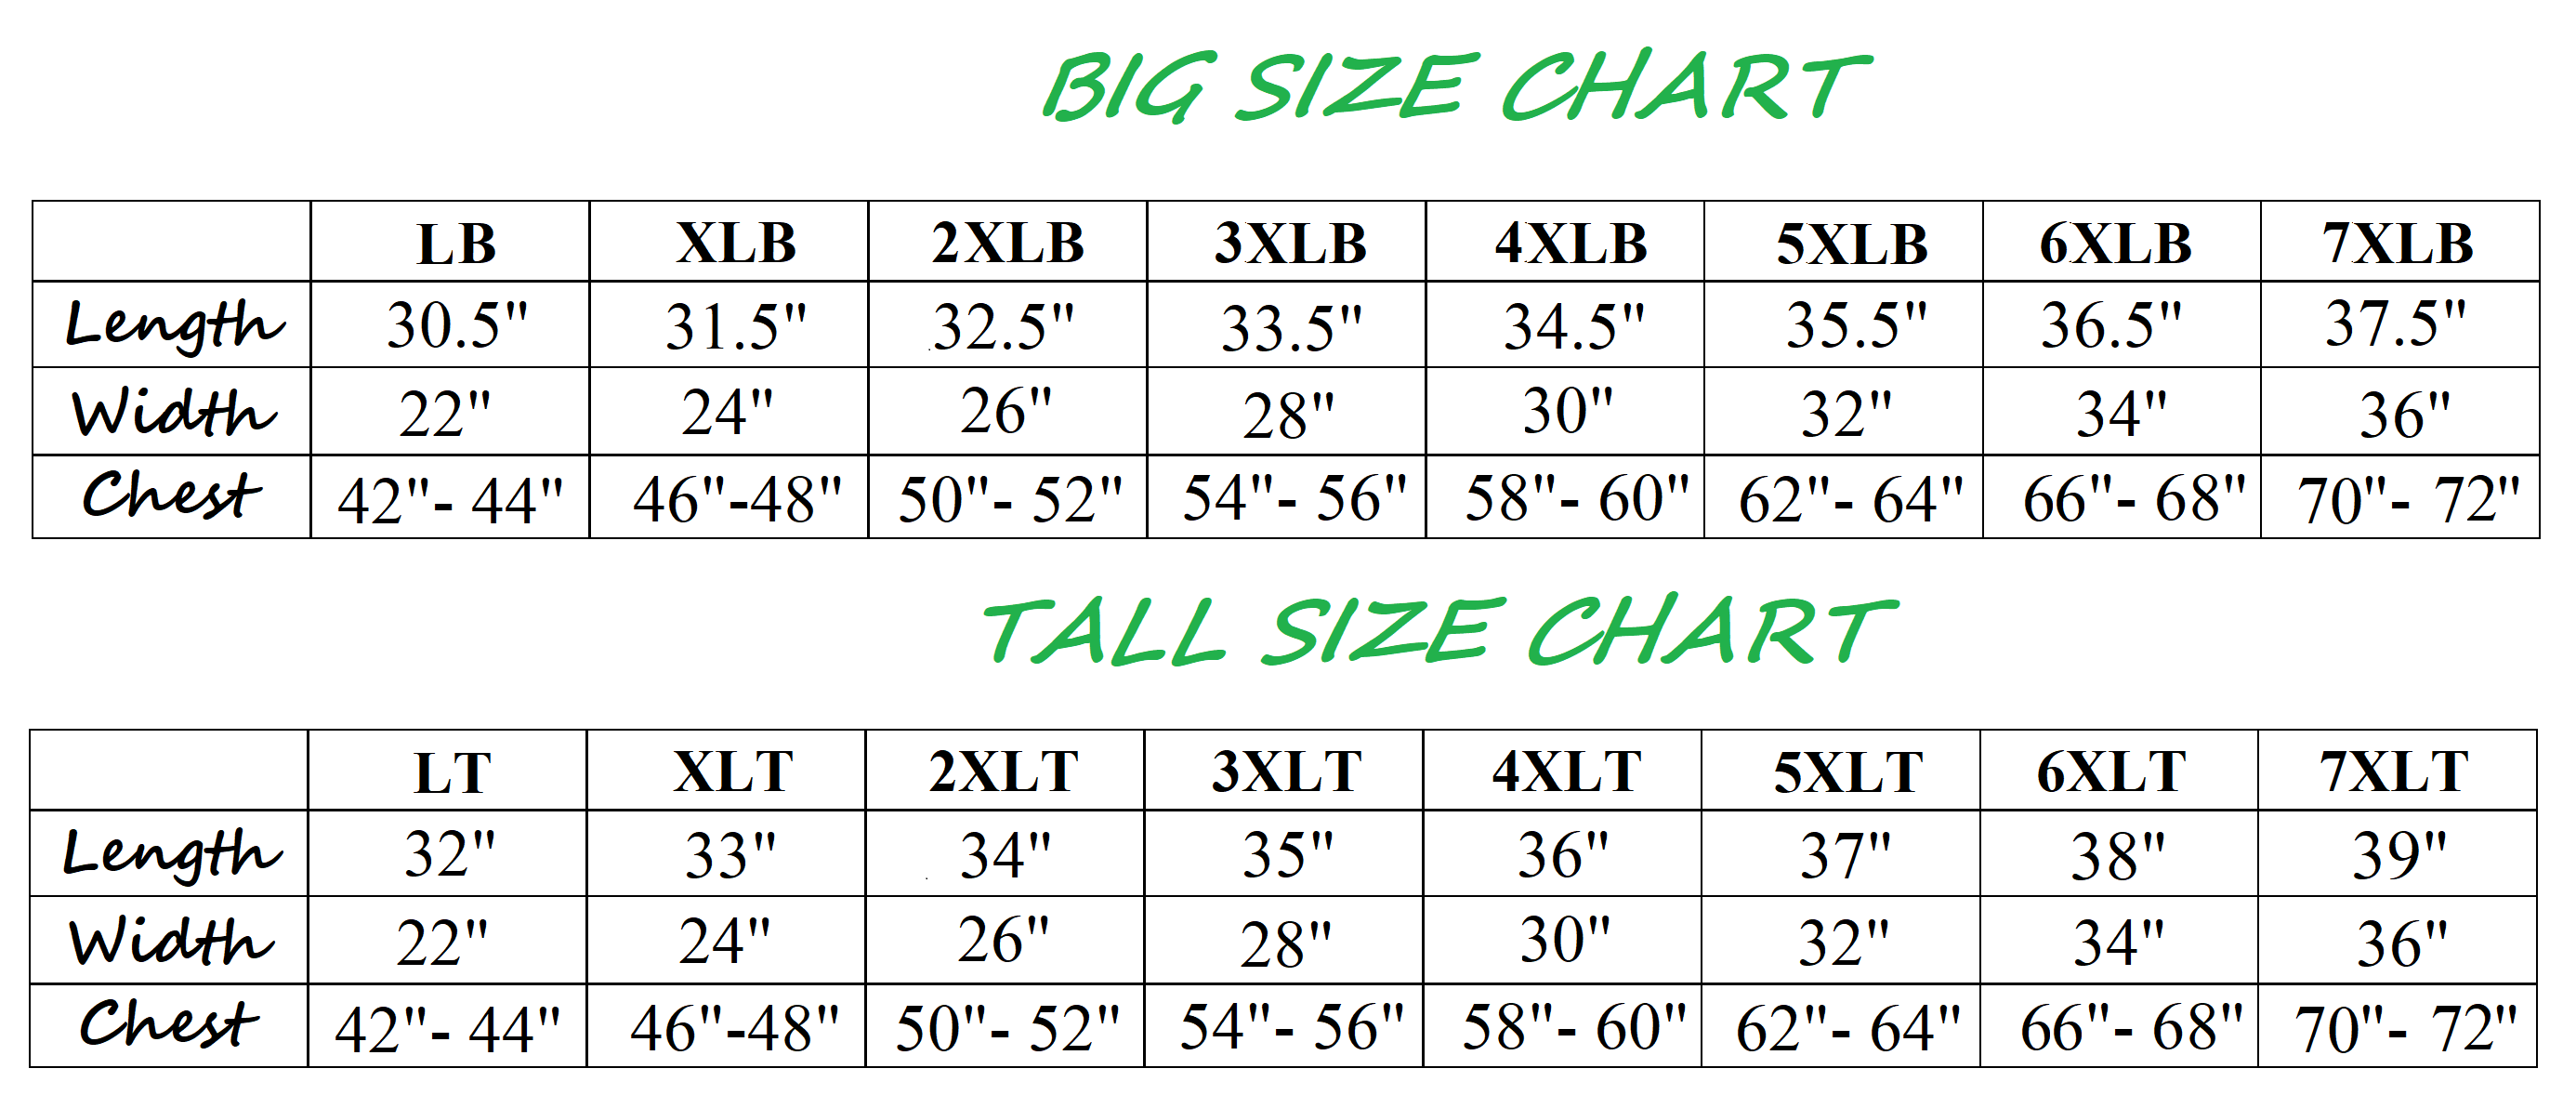 https://www.styllion.net/wp-content/uploads/2019/11/Big-and-Tall-Size-Chart-1.png